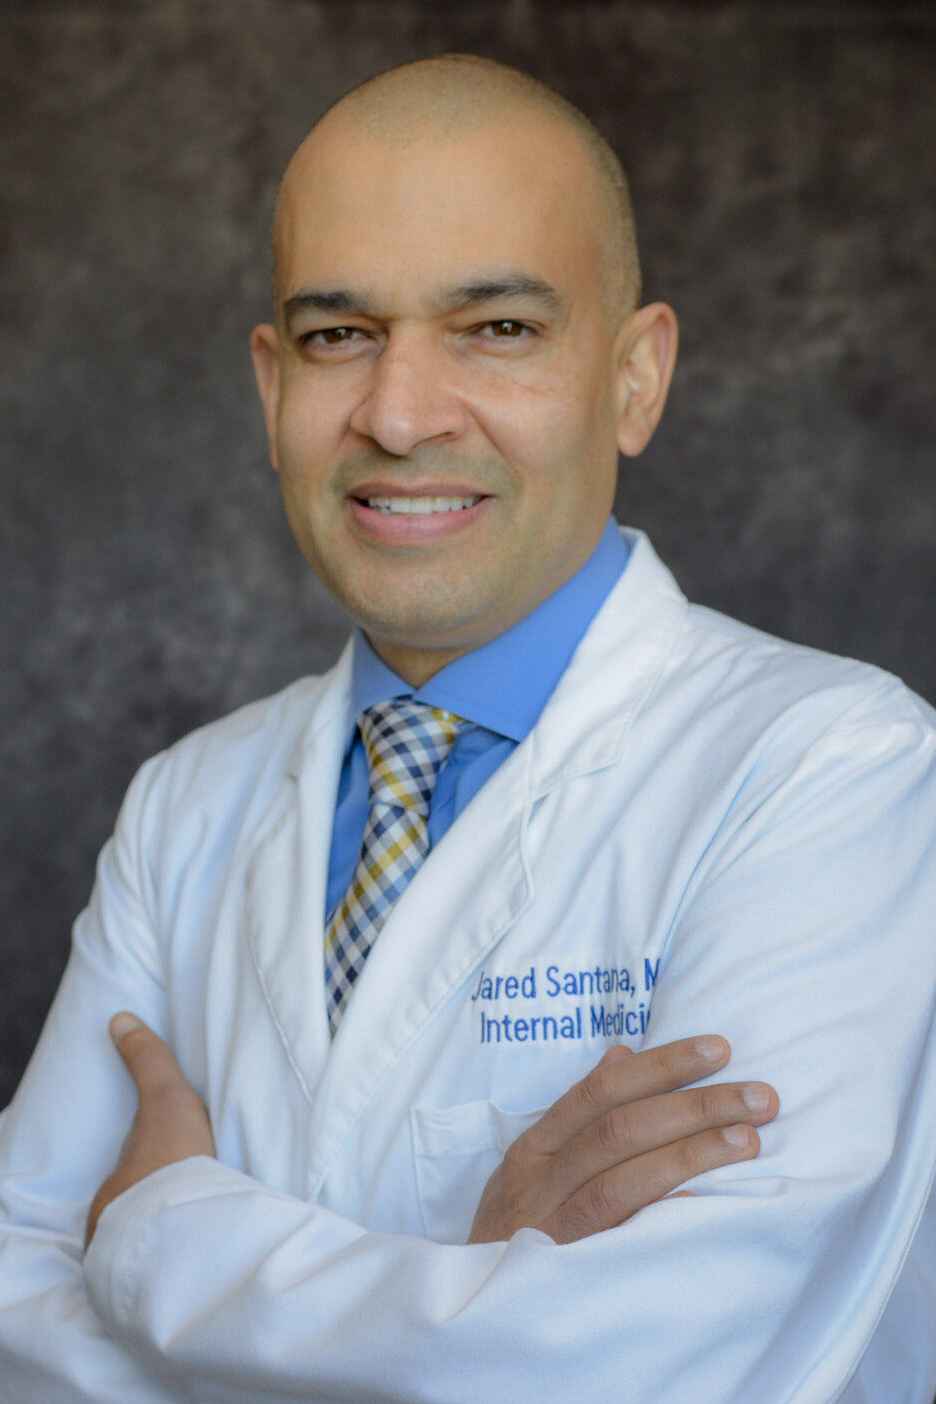 Dr. Jared Santana